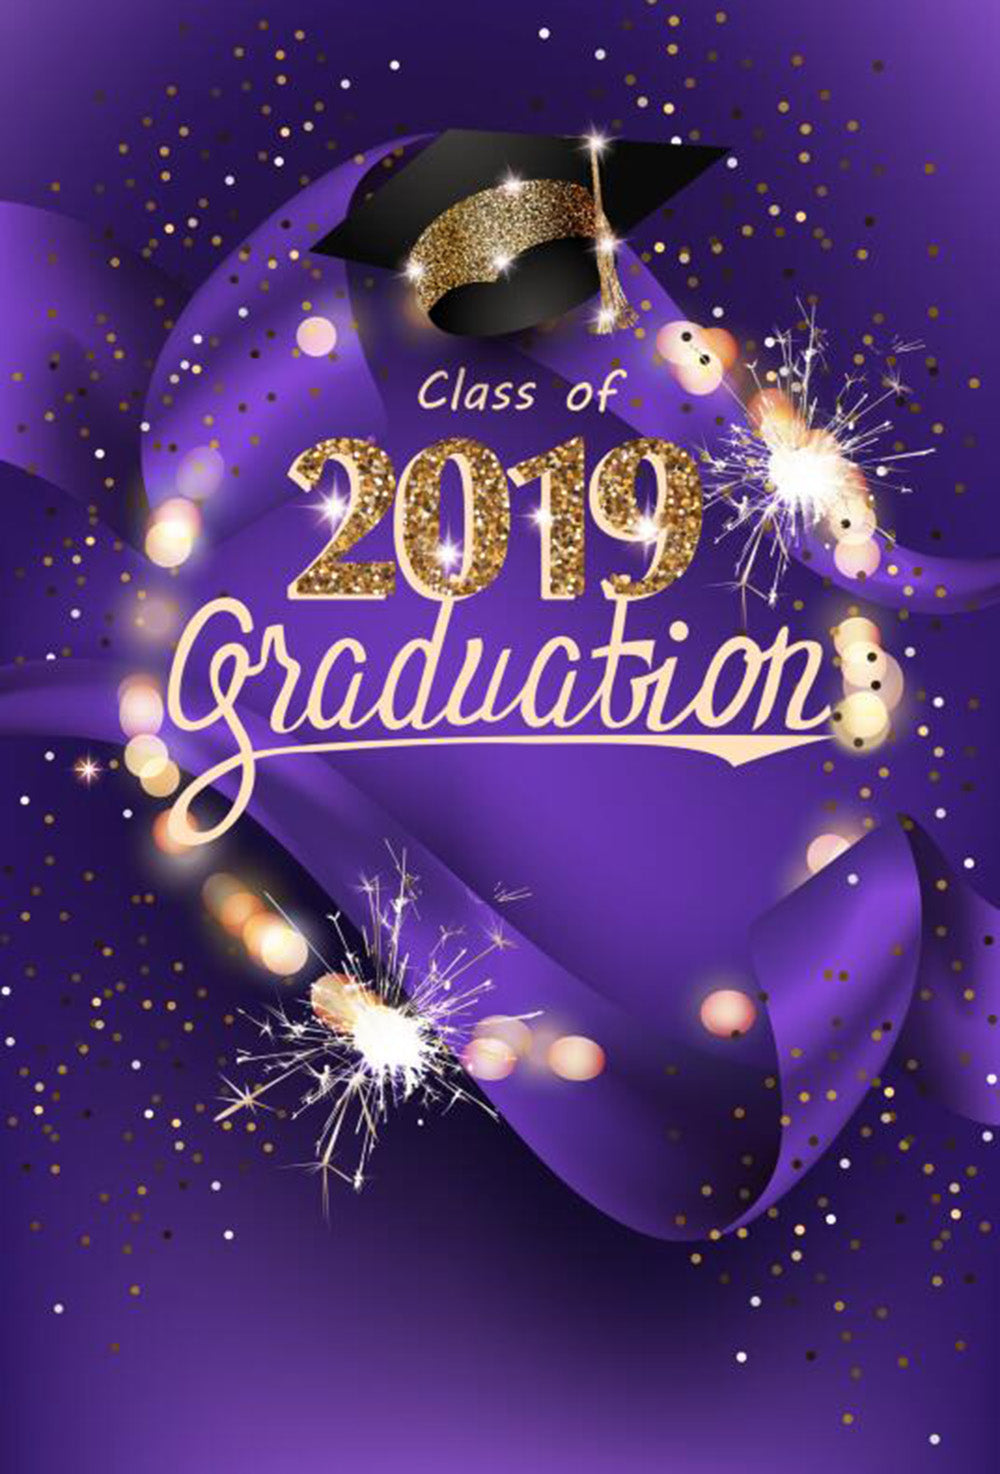 custom school photo booth props purple 2019 graduation photo backdrop